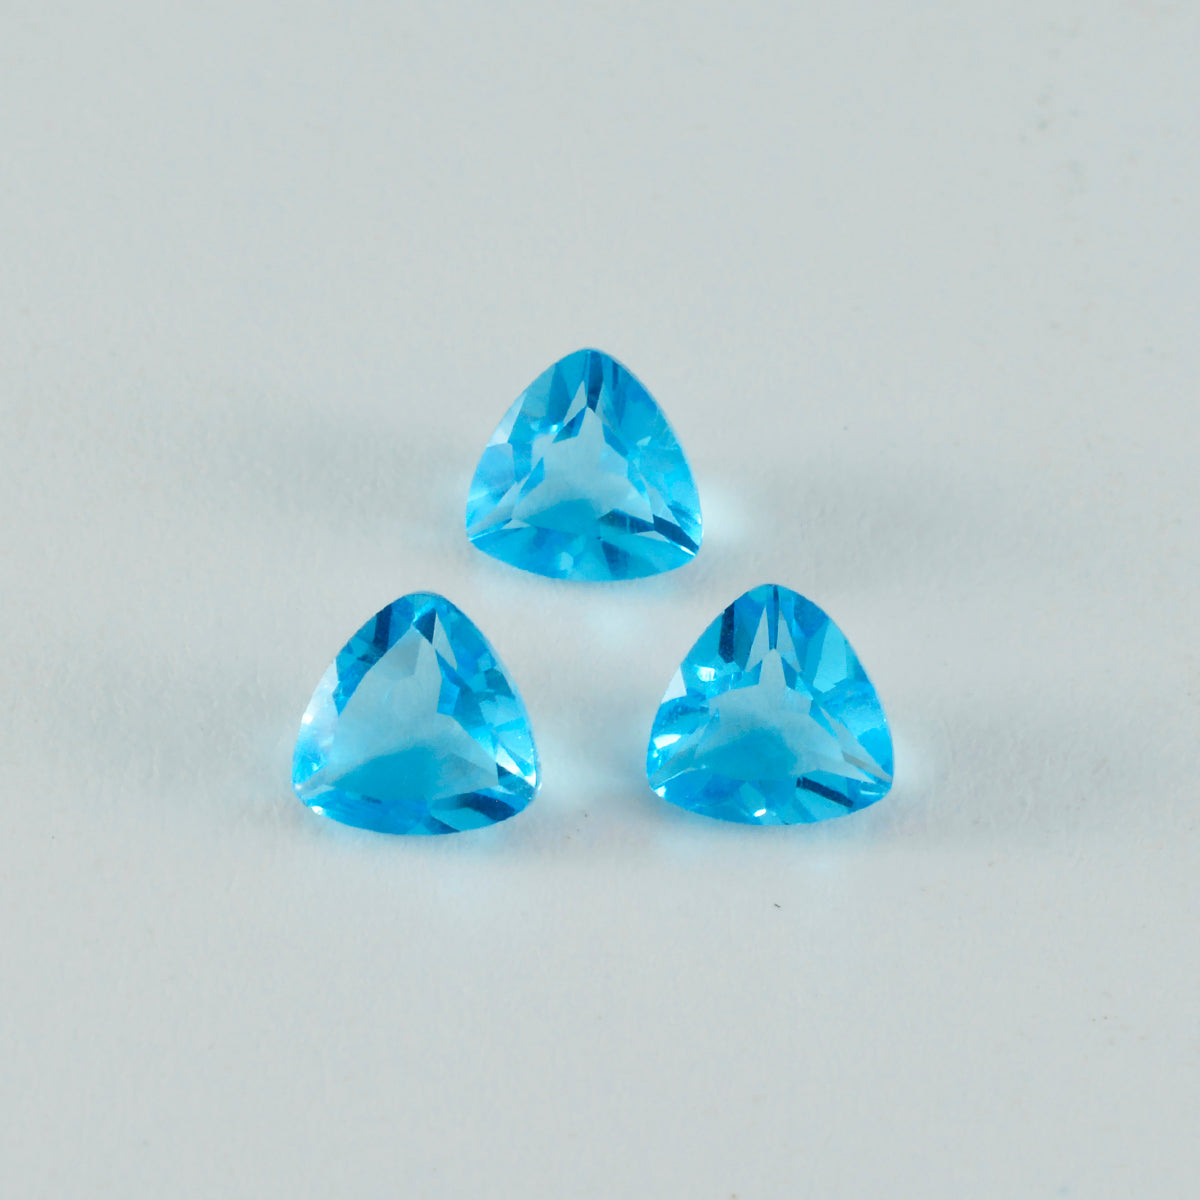 Riyogems 1PC Blue Topaz CZ Faceted 10x10 mm Trillion Shape awesome Quality Gems